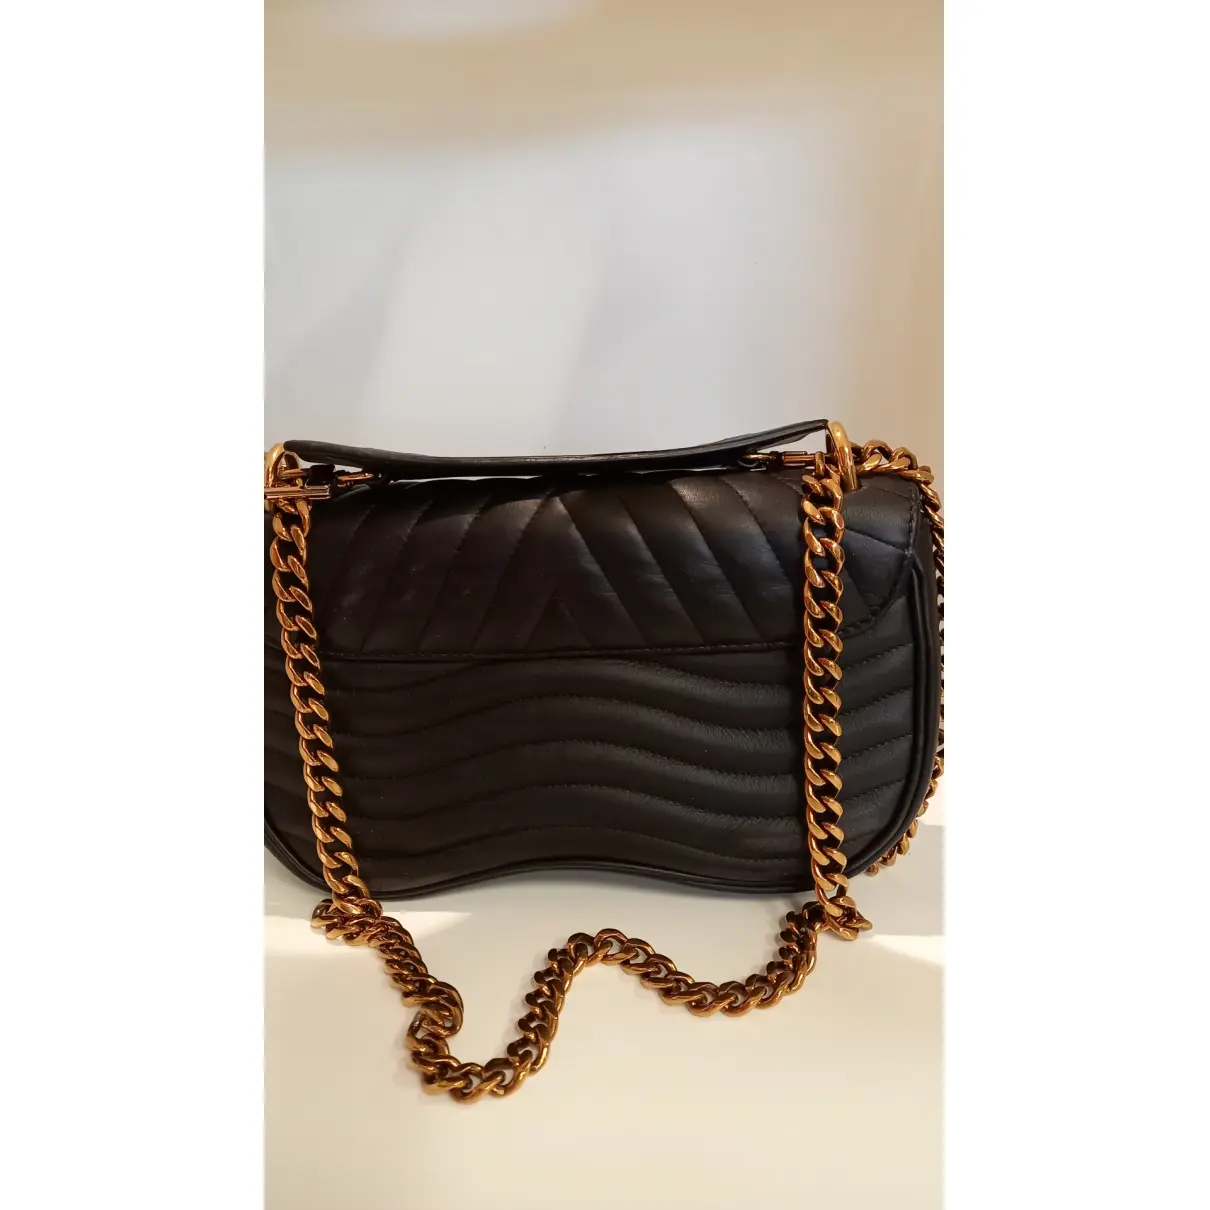 Buy Louis Vuitton New Wave leather handbag online